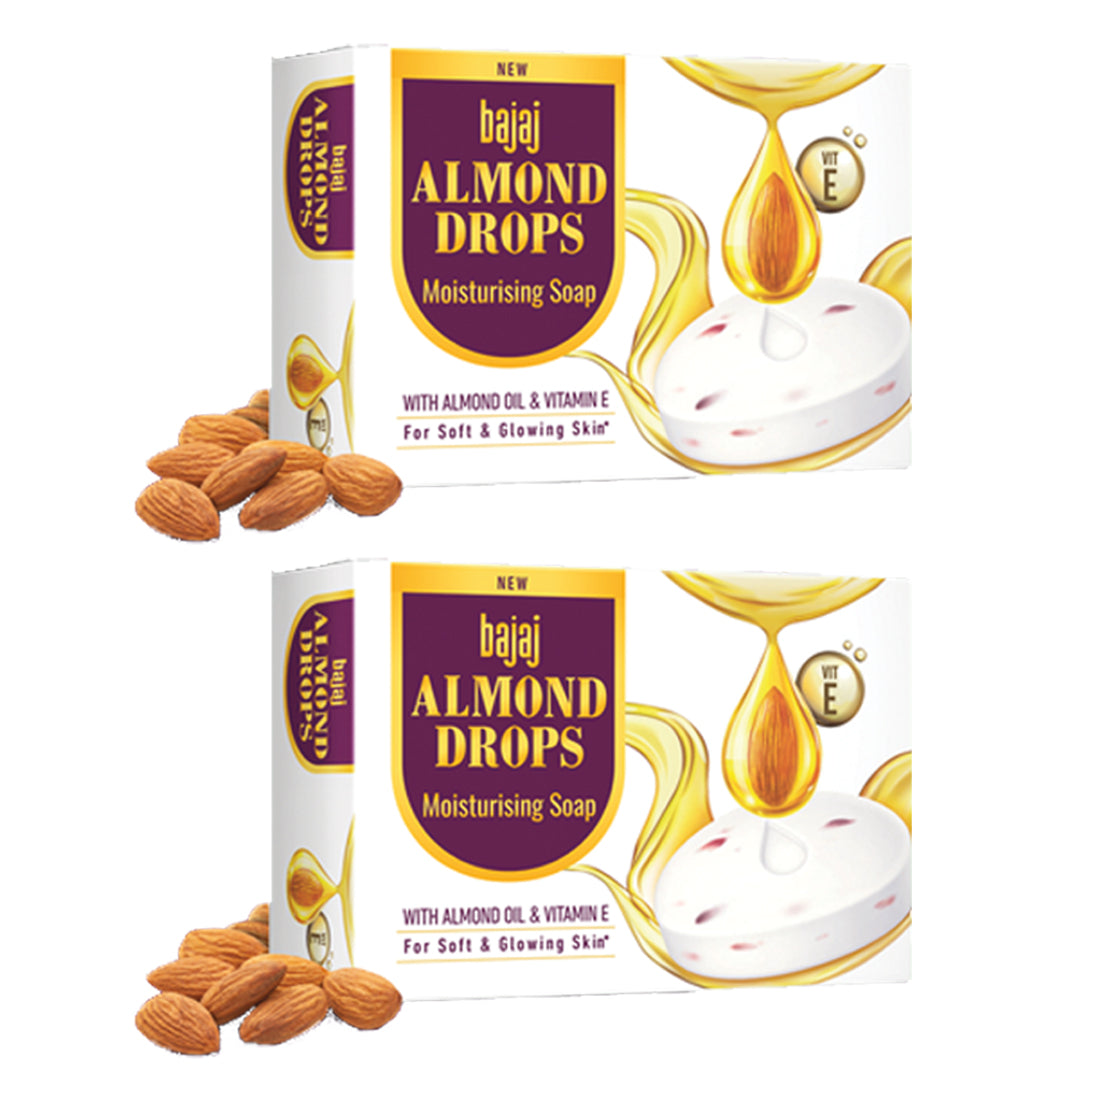 Bajaj Almond Drops Moisturising Soap 125gm Pack Of 2